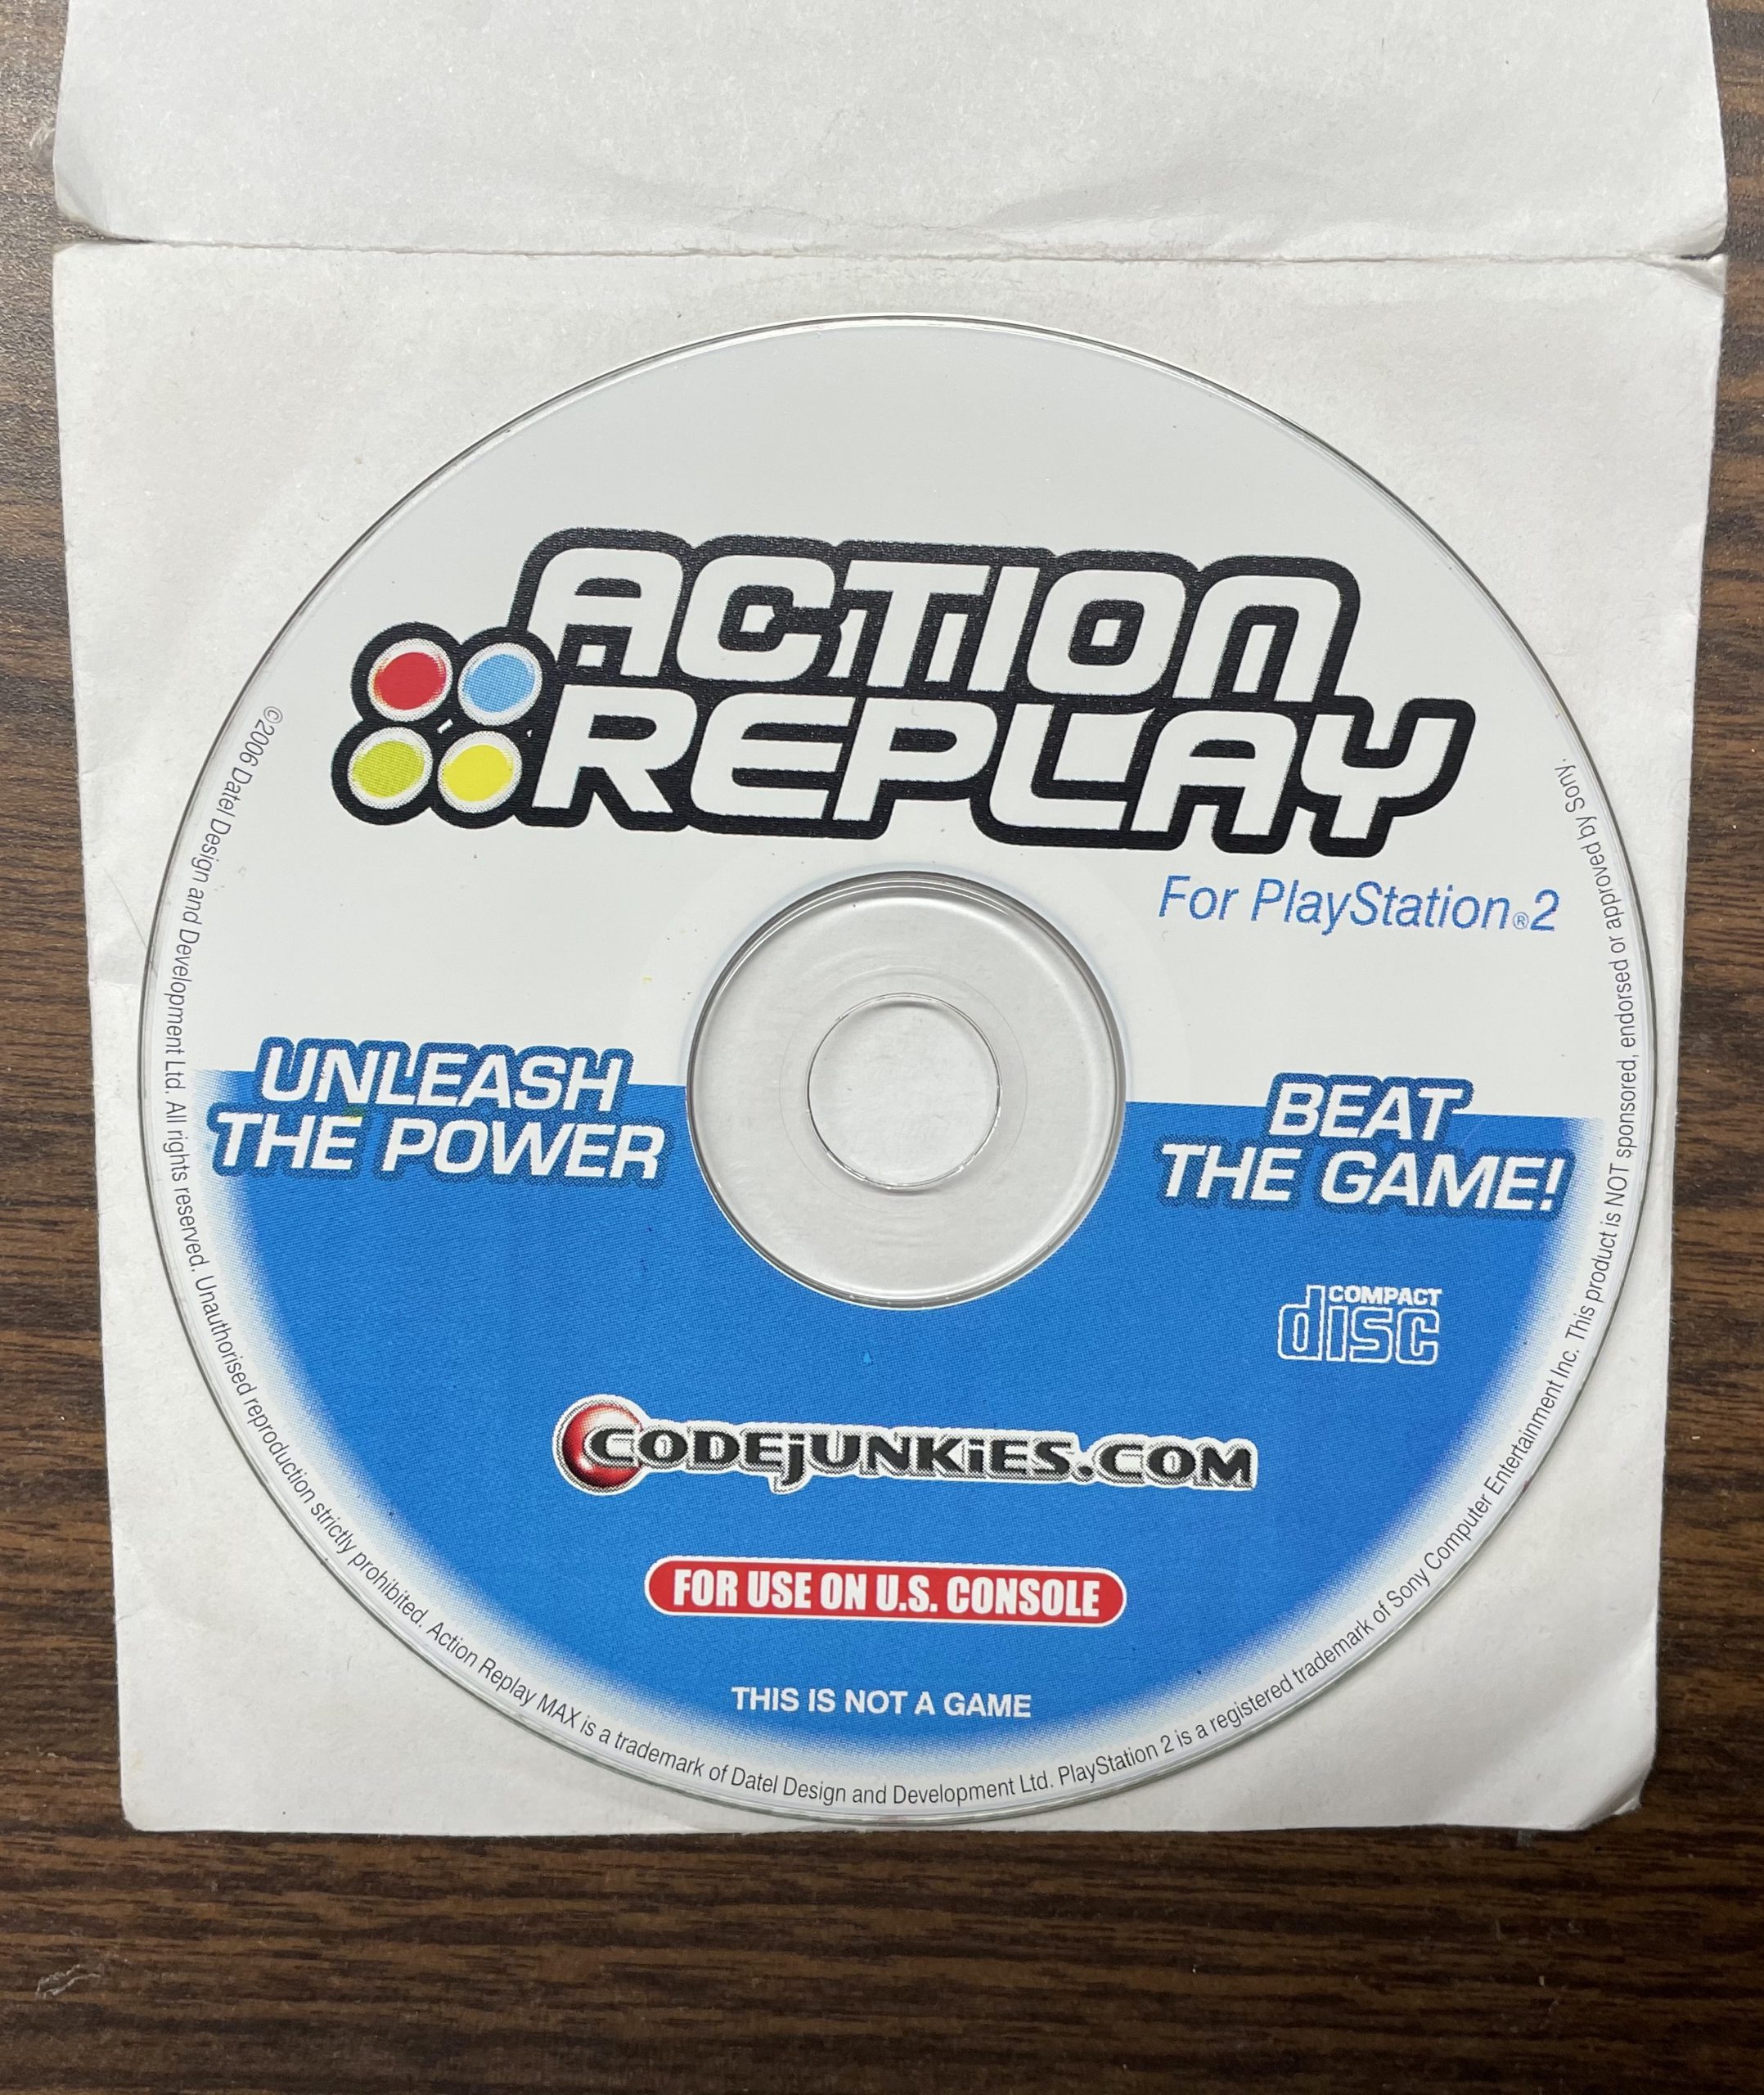 Playstation 2 Action Replay Max